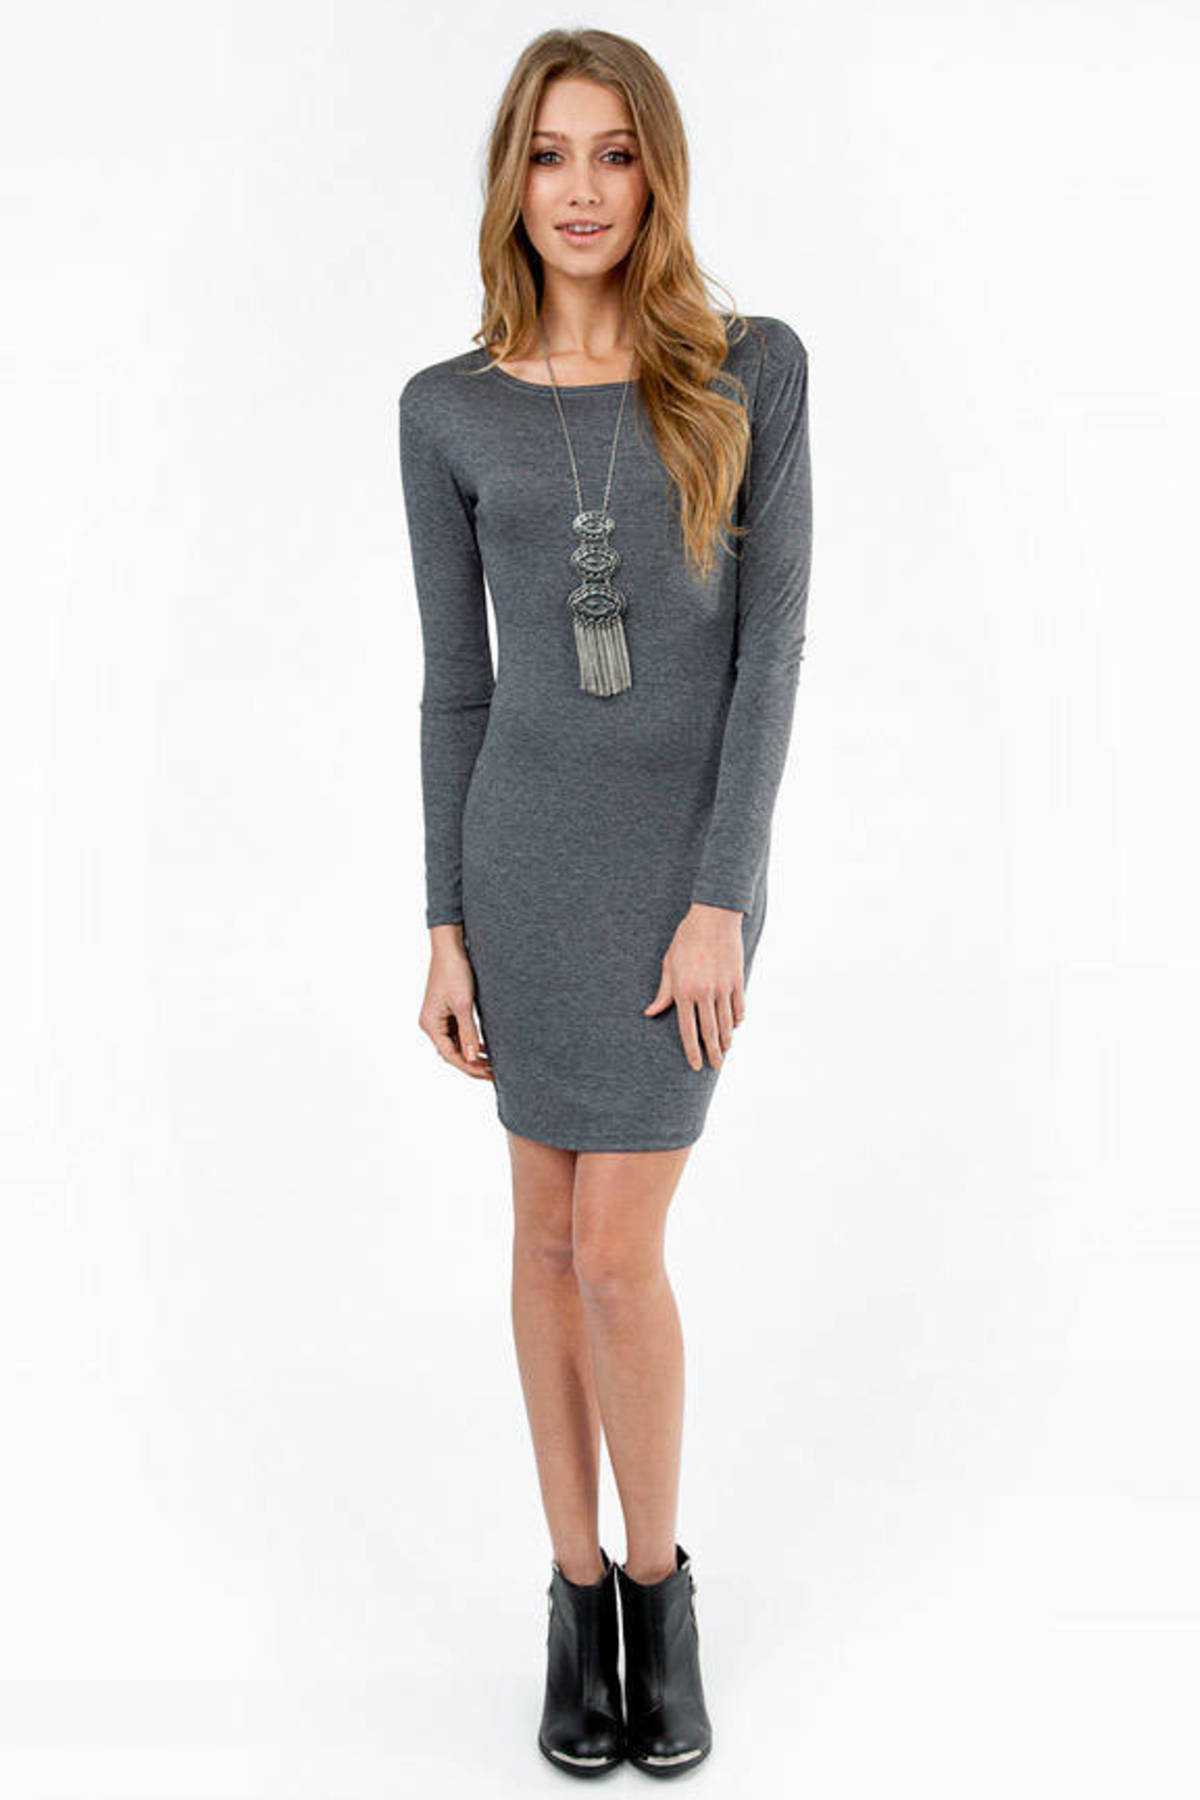 Jersey Dress in Dark Grey - $15 | Tobi US